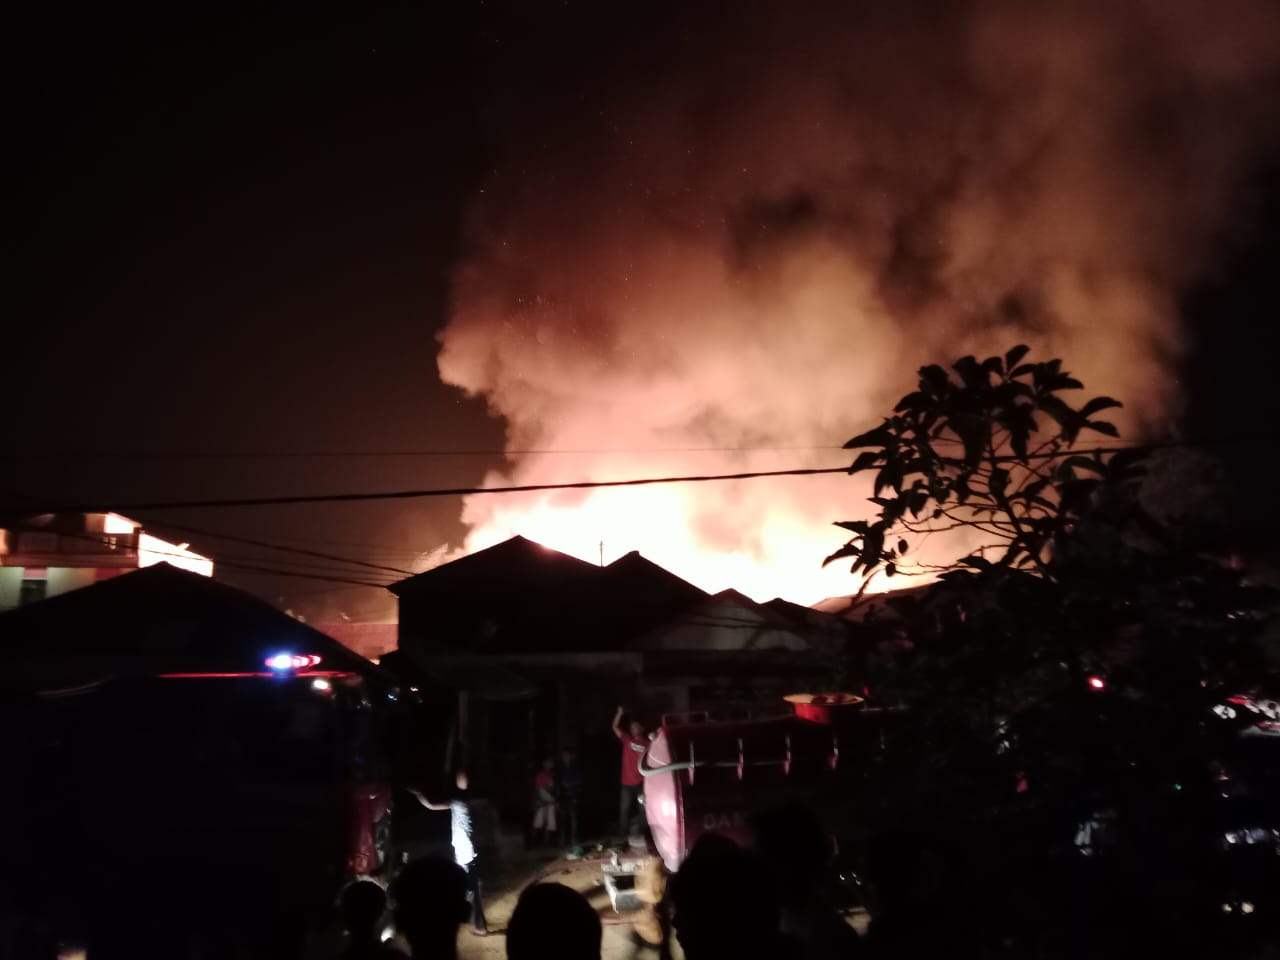 Keterangan Foto: Sebanyak 17 unit rumah di Lorong V dan VI Pasir Bidang, Lingkungan IV, Kelurahan Aek Habil, Kecamatan Sibolga Selatan, Kota Sibolga terbakar, Rabu (13/3) sekitar pukul 20.00 wib.